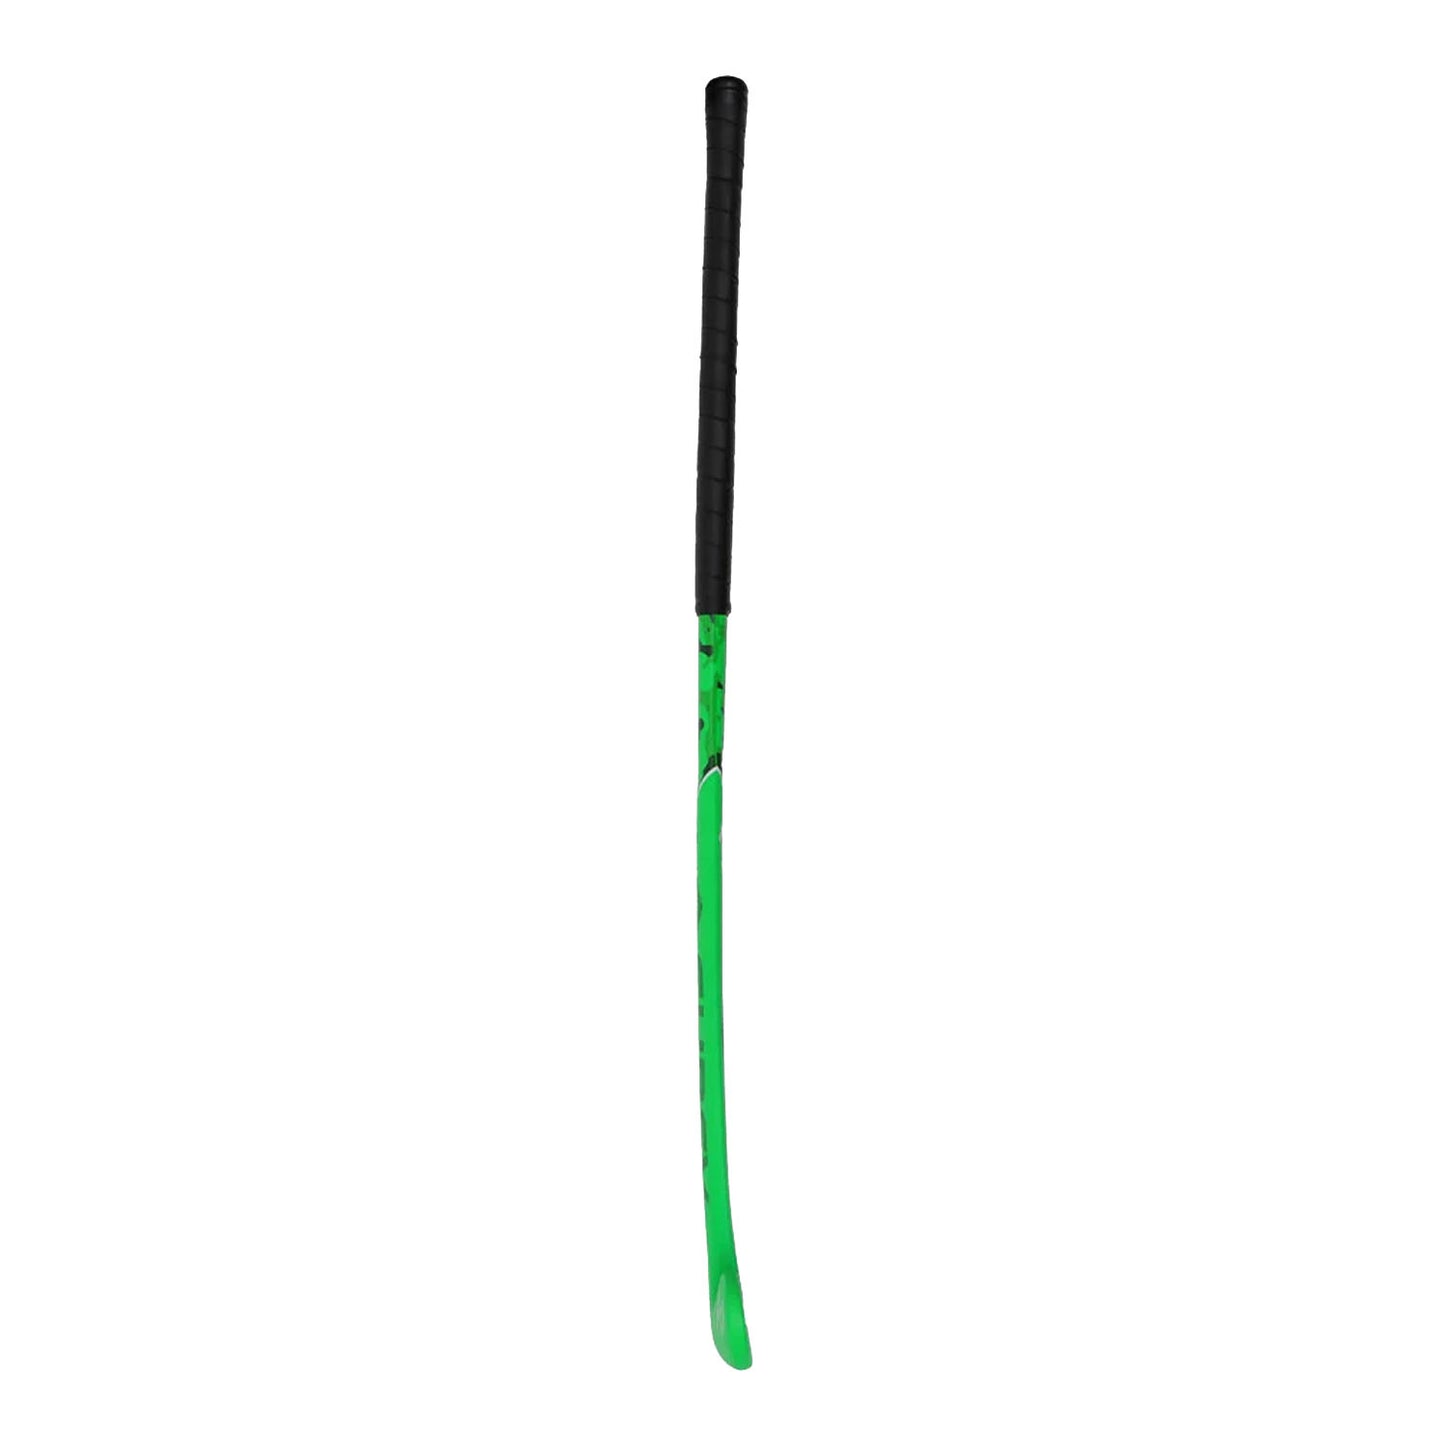 Shrey Heritage Hockey Wooden Stick - Best Price online Prokicksports.com